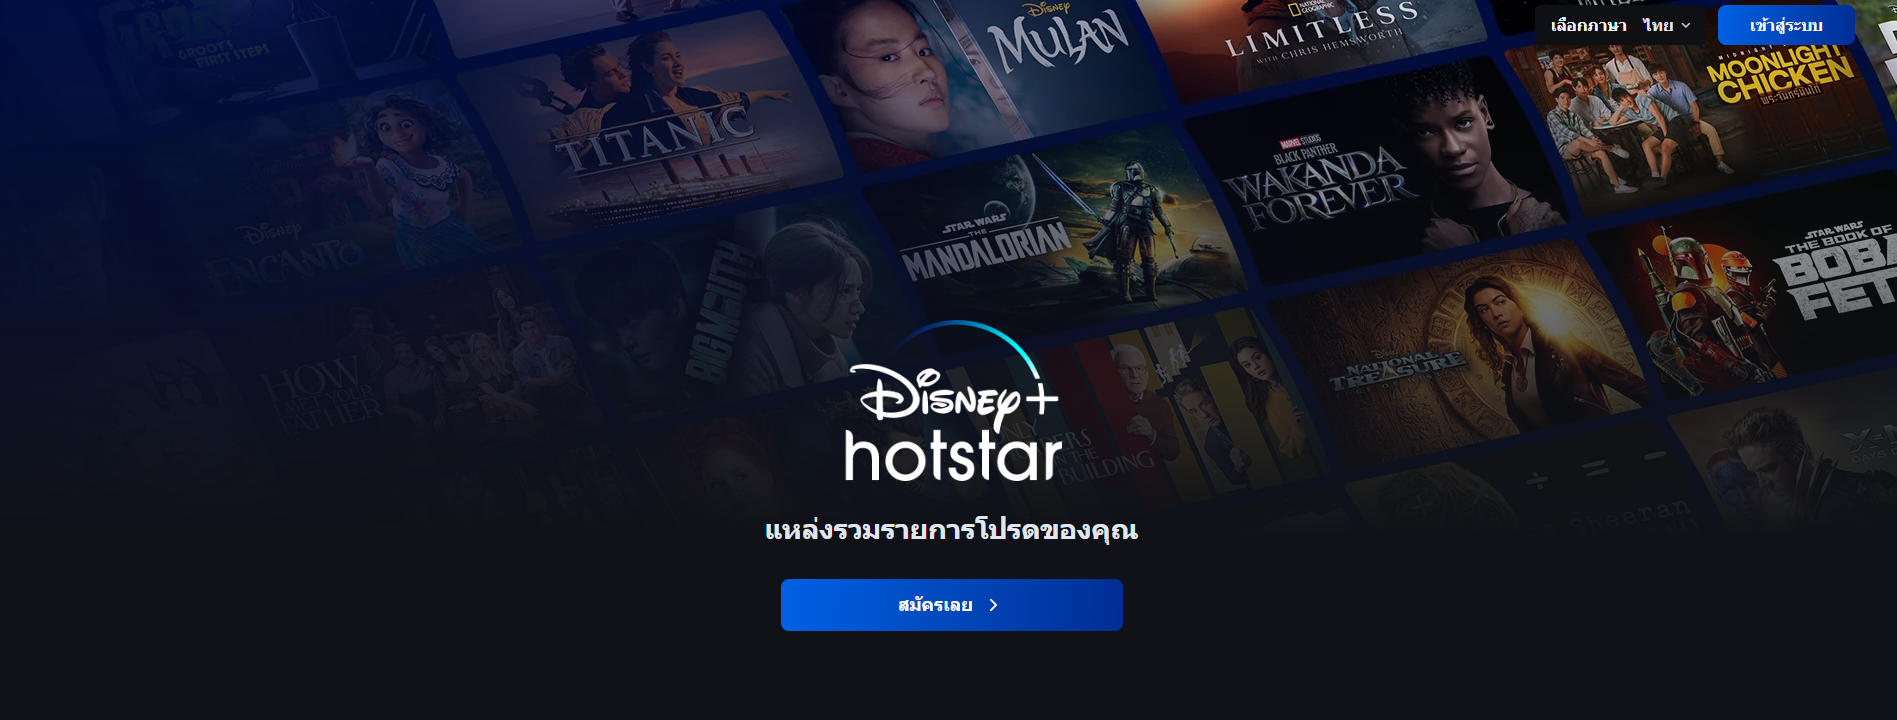 Disney+ Hotstar ปรับราคาใหม่